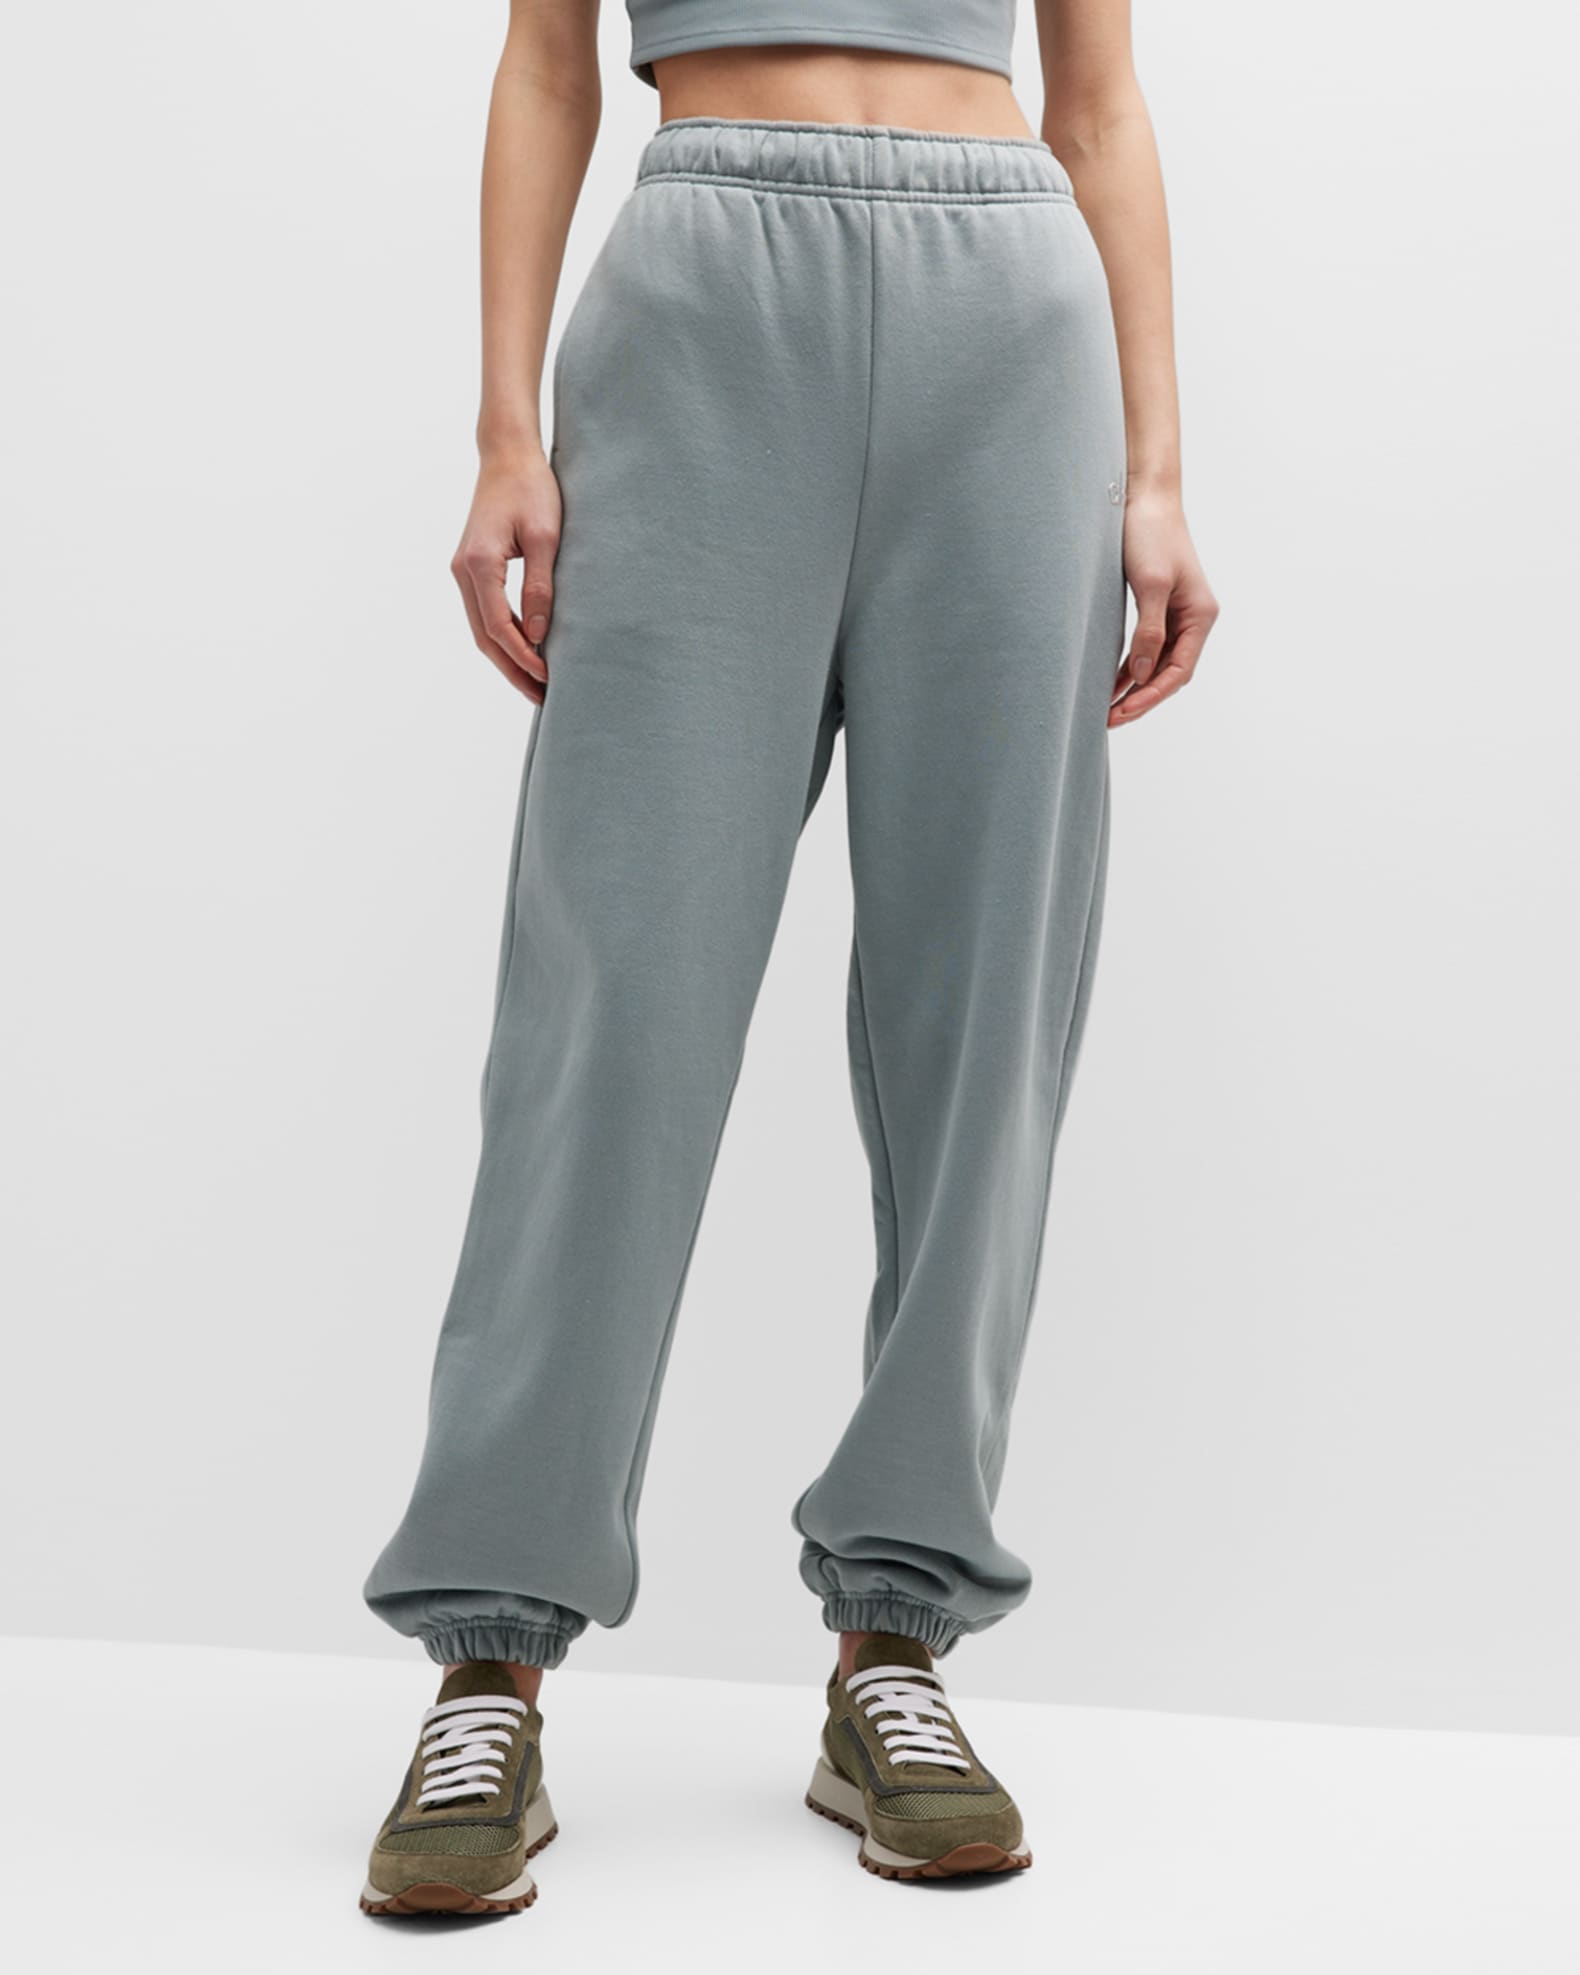 Accolade Sweatpant - Cosmic Grey  Bold jackets, Alo yoga, Sweatpants